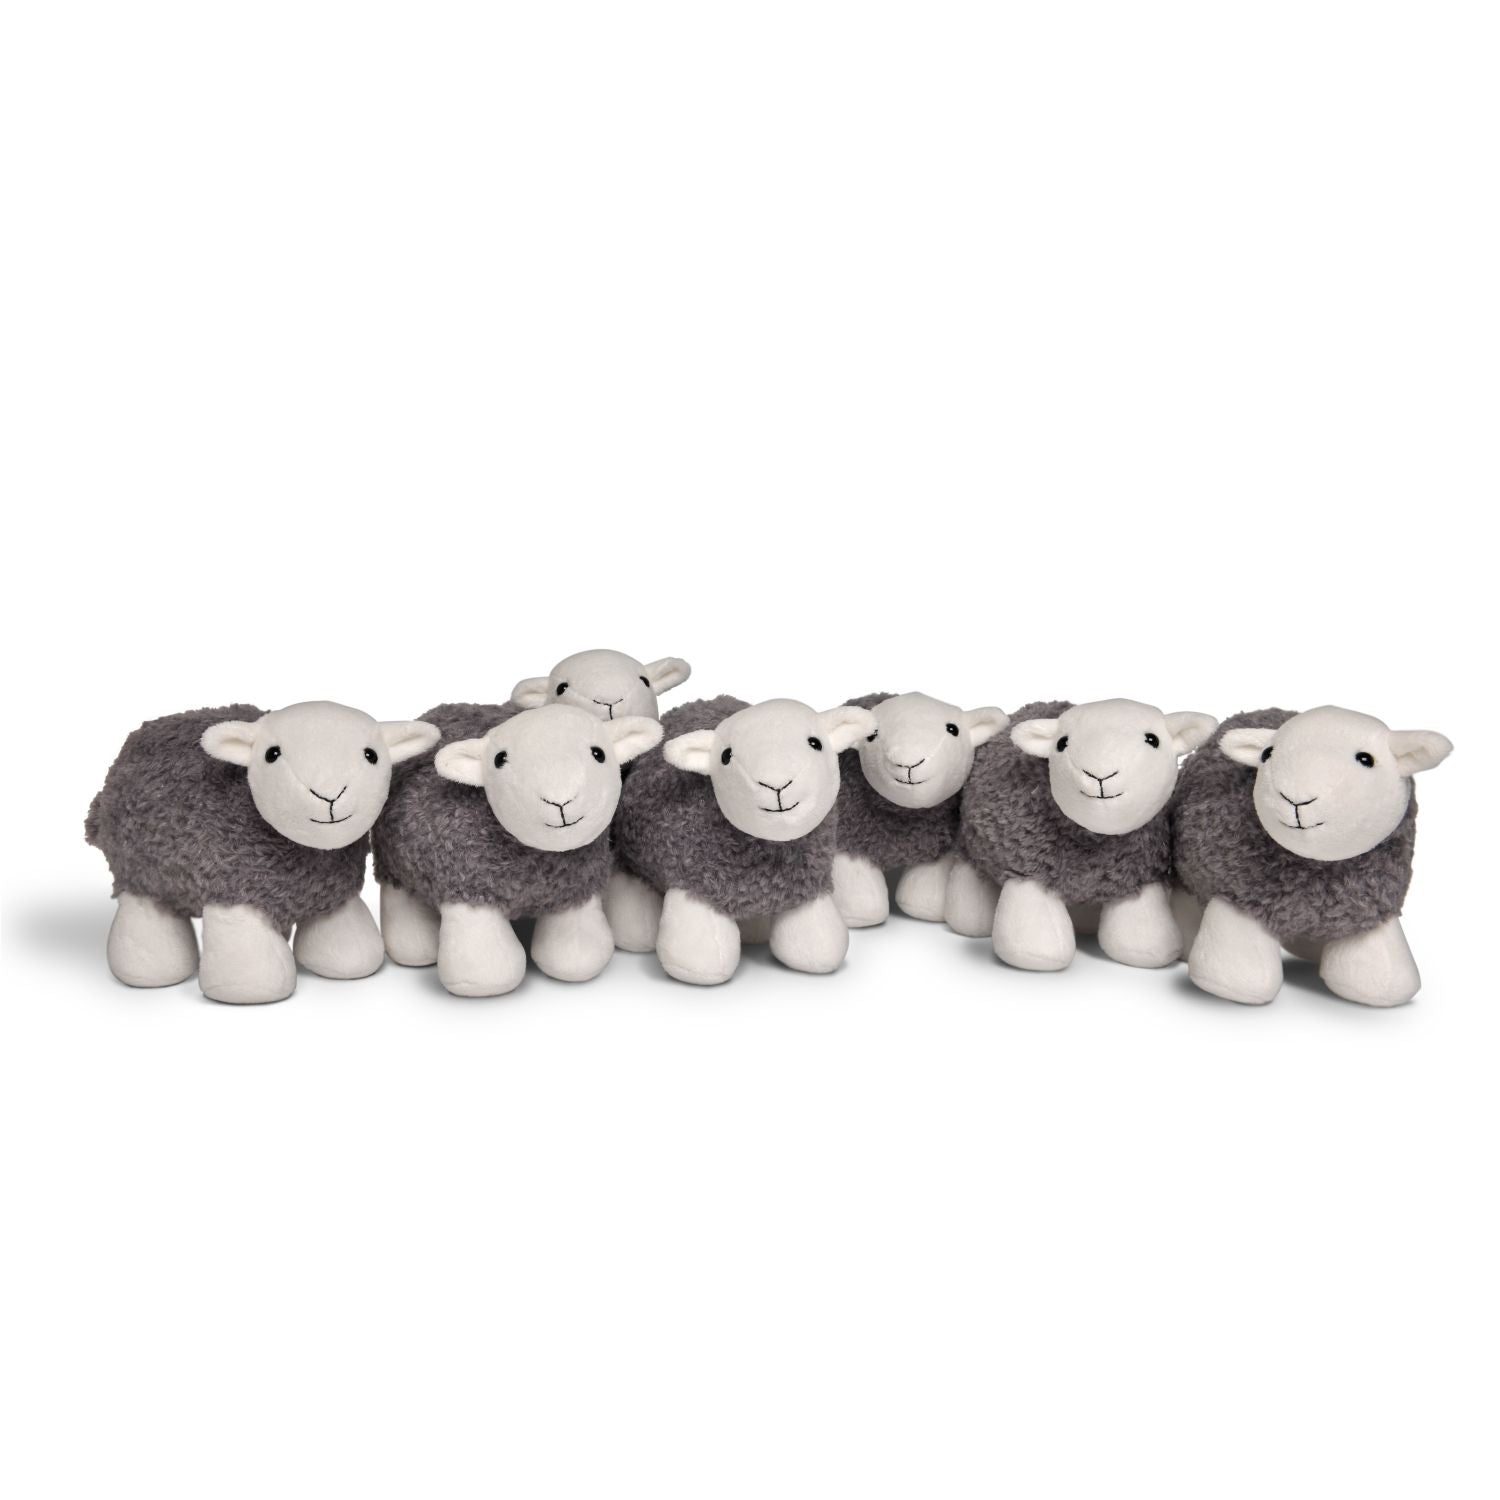 Little Herdy Soft Toy Sheep - Grey (Herd)